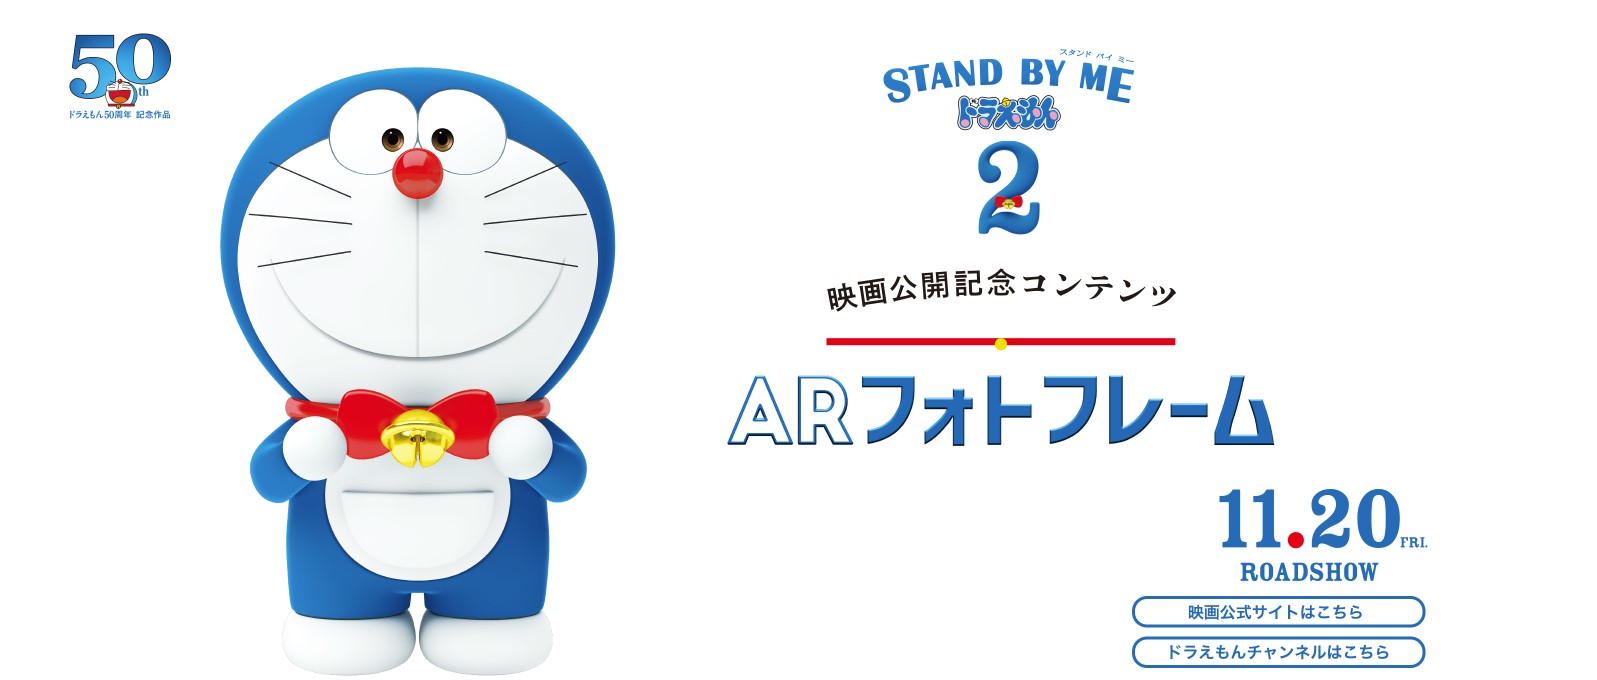 『STAND BY ME ドラえもん 2』の特設ページ